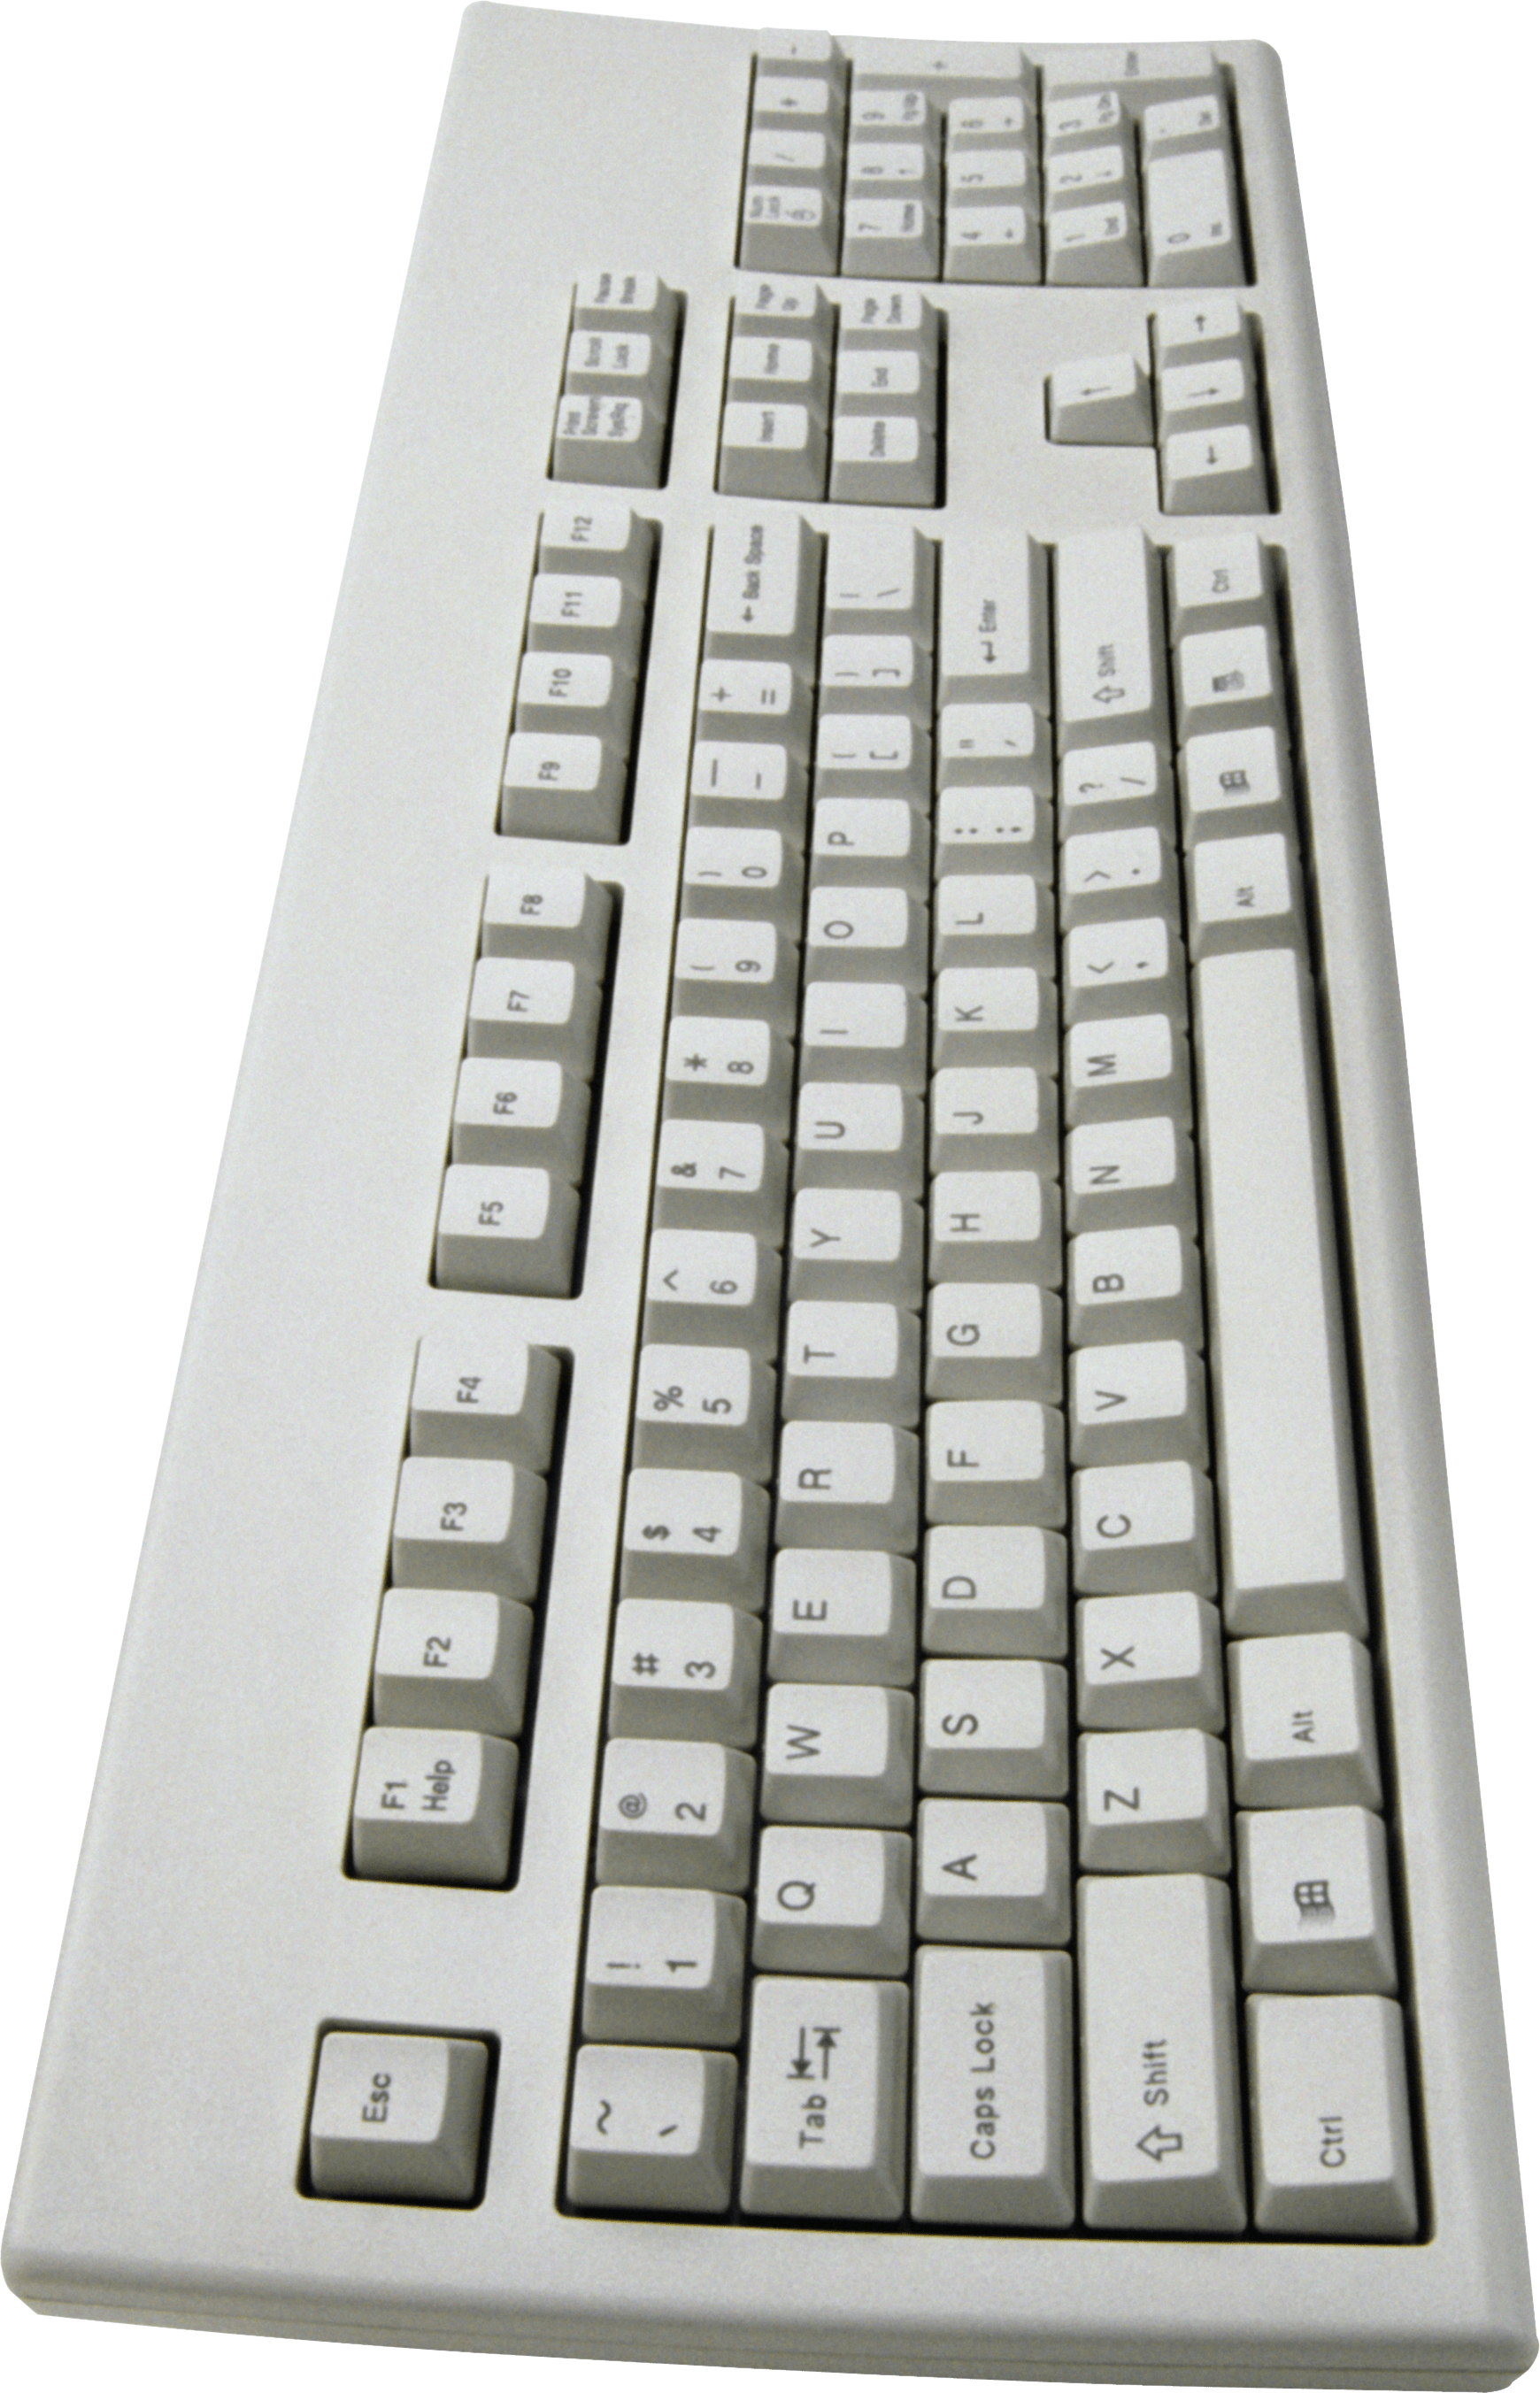 Download White Keyboard Png Image HQ PNG Image | FreePNGImg